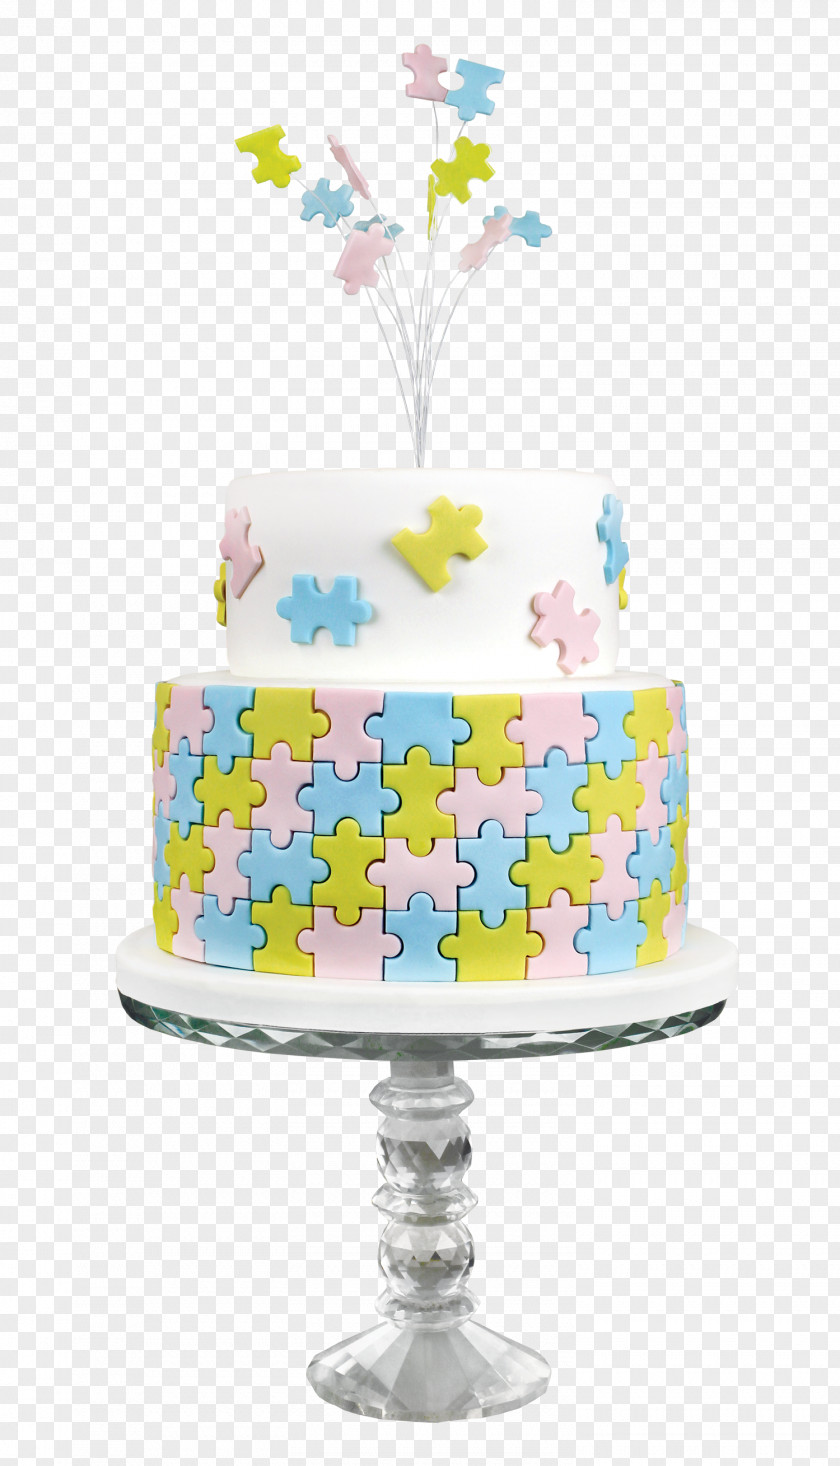 Cake Cupcake Frosting & Icing Decorating Fondant PNG